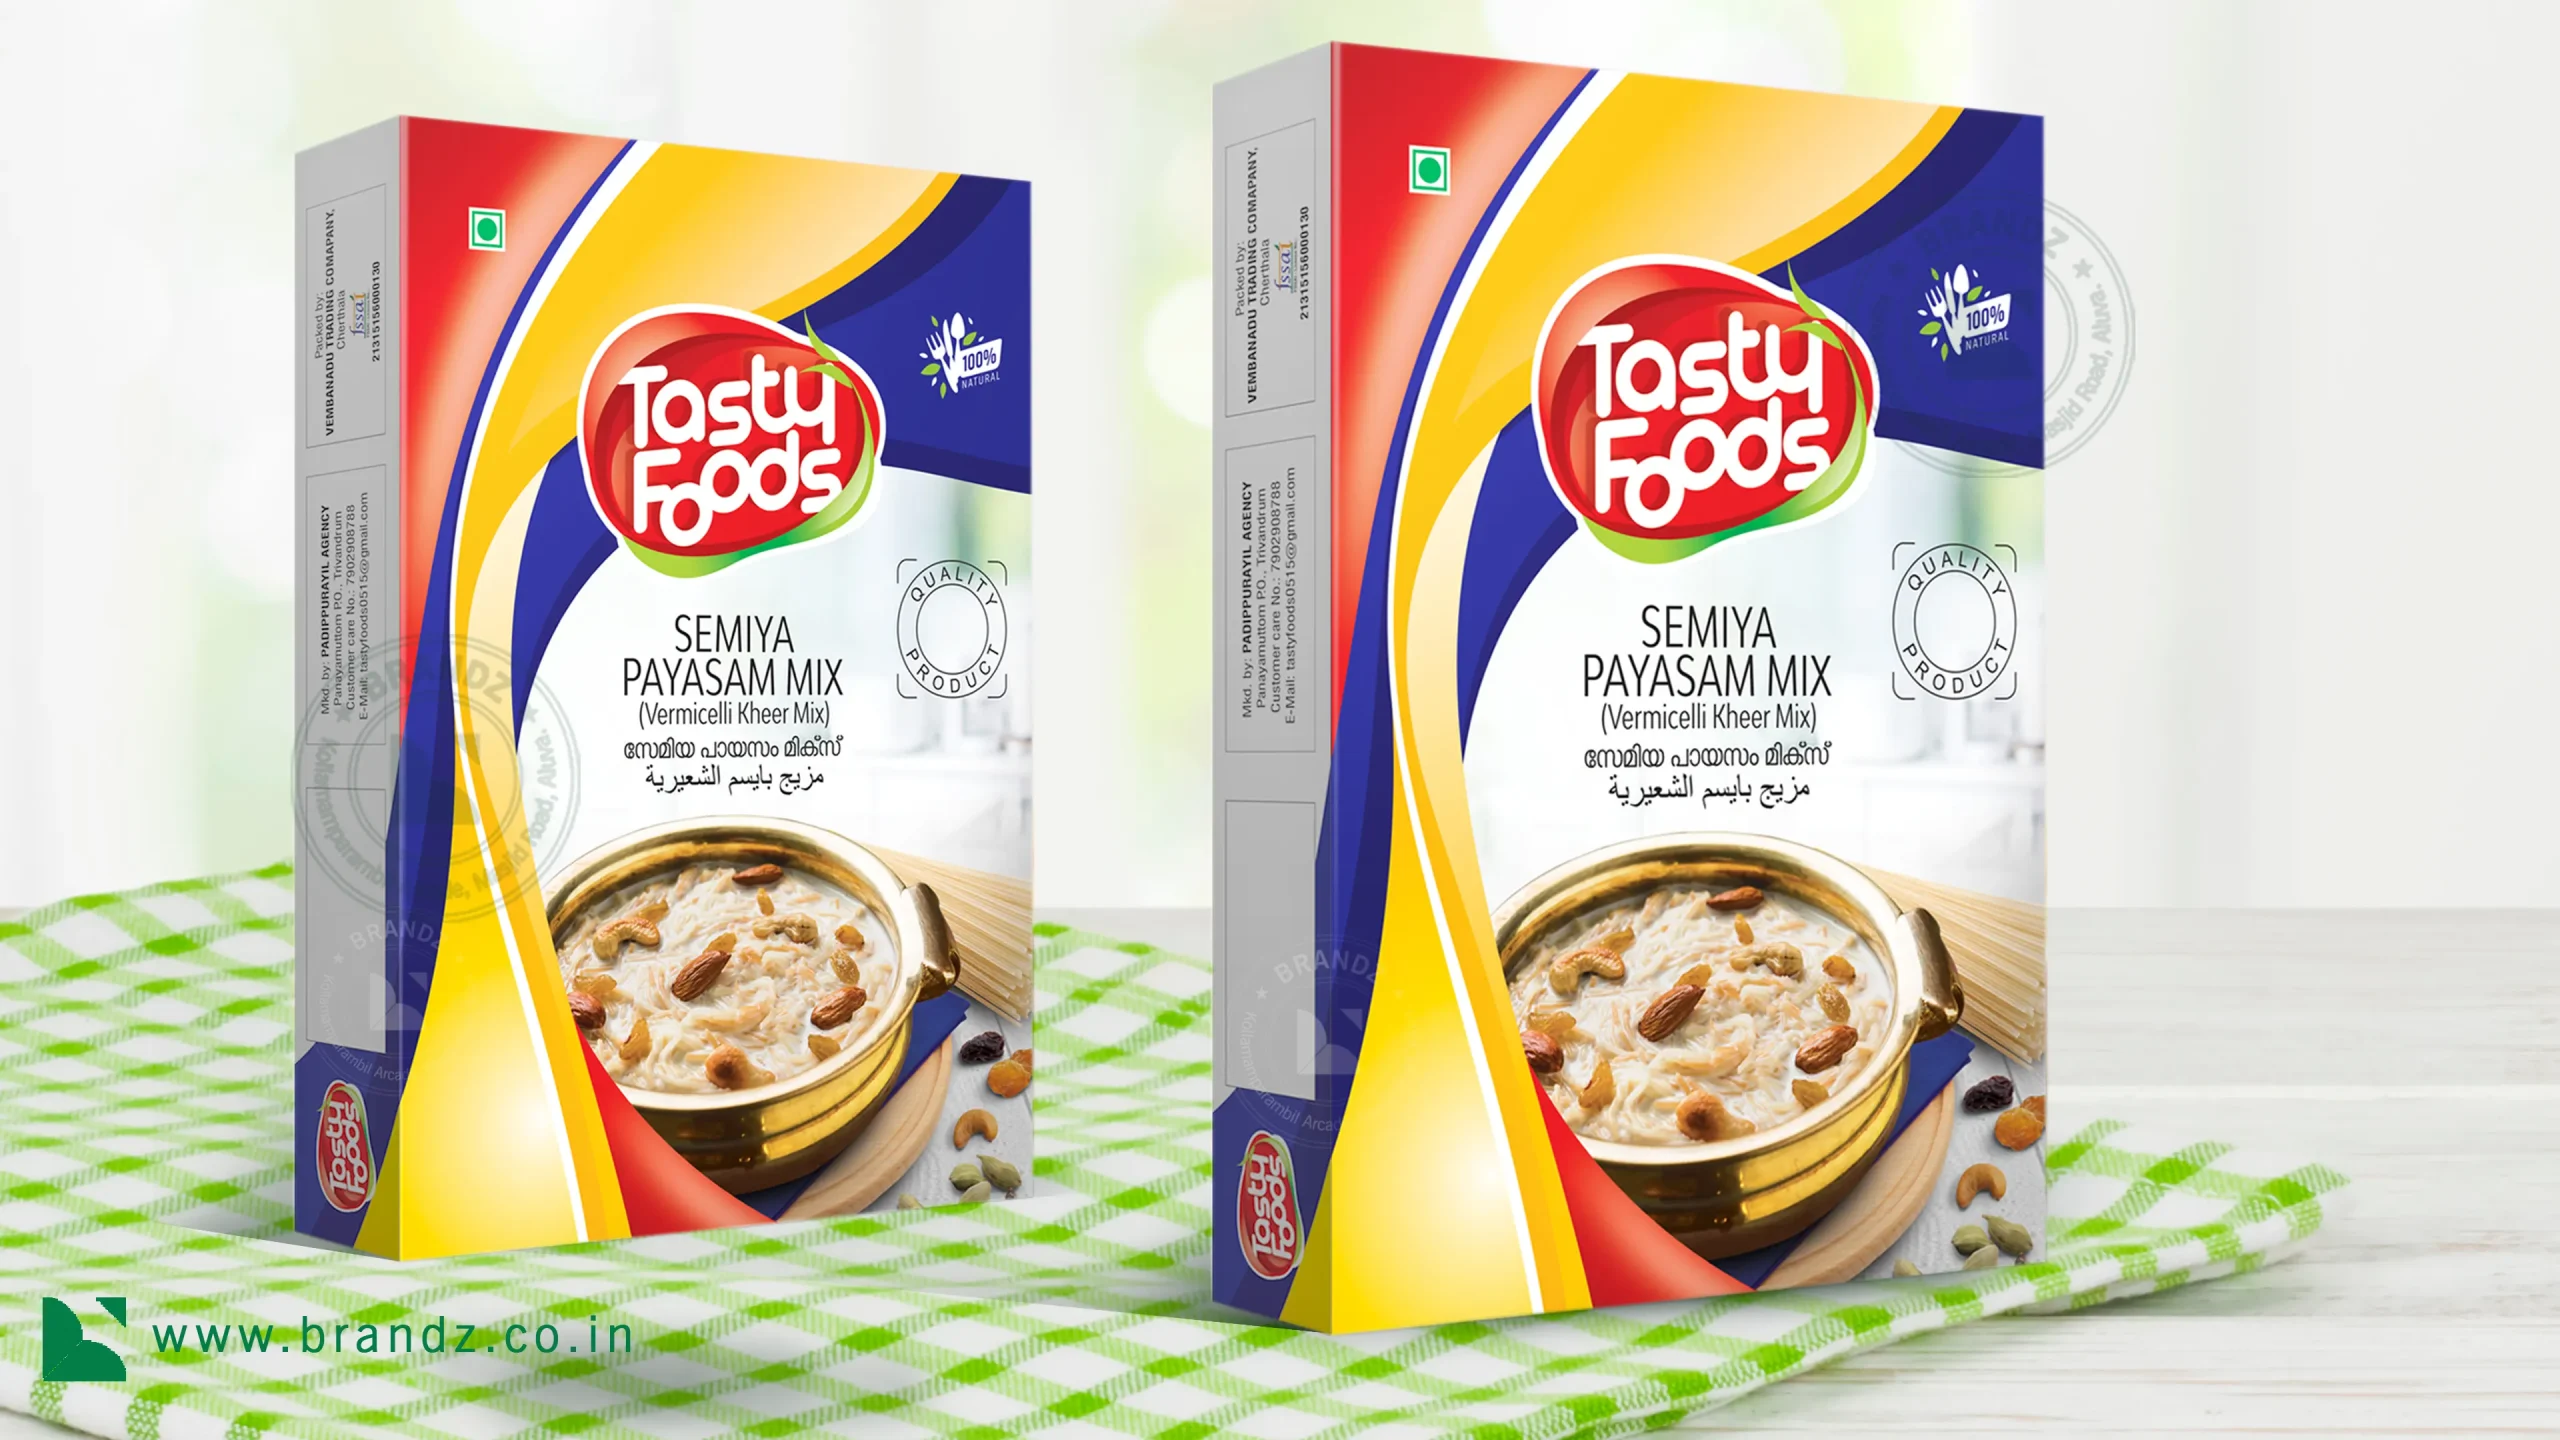 Tasty Foods Semiya Payasam Mix Box